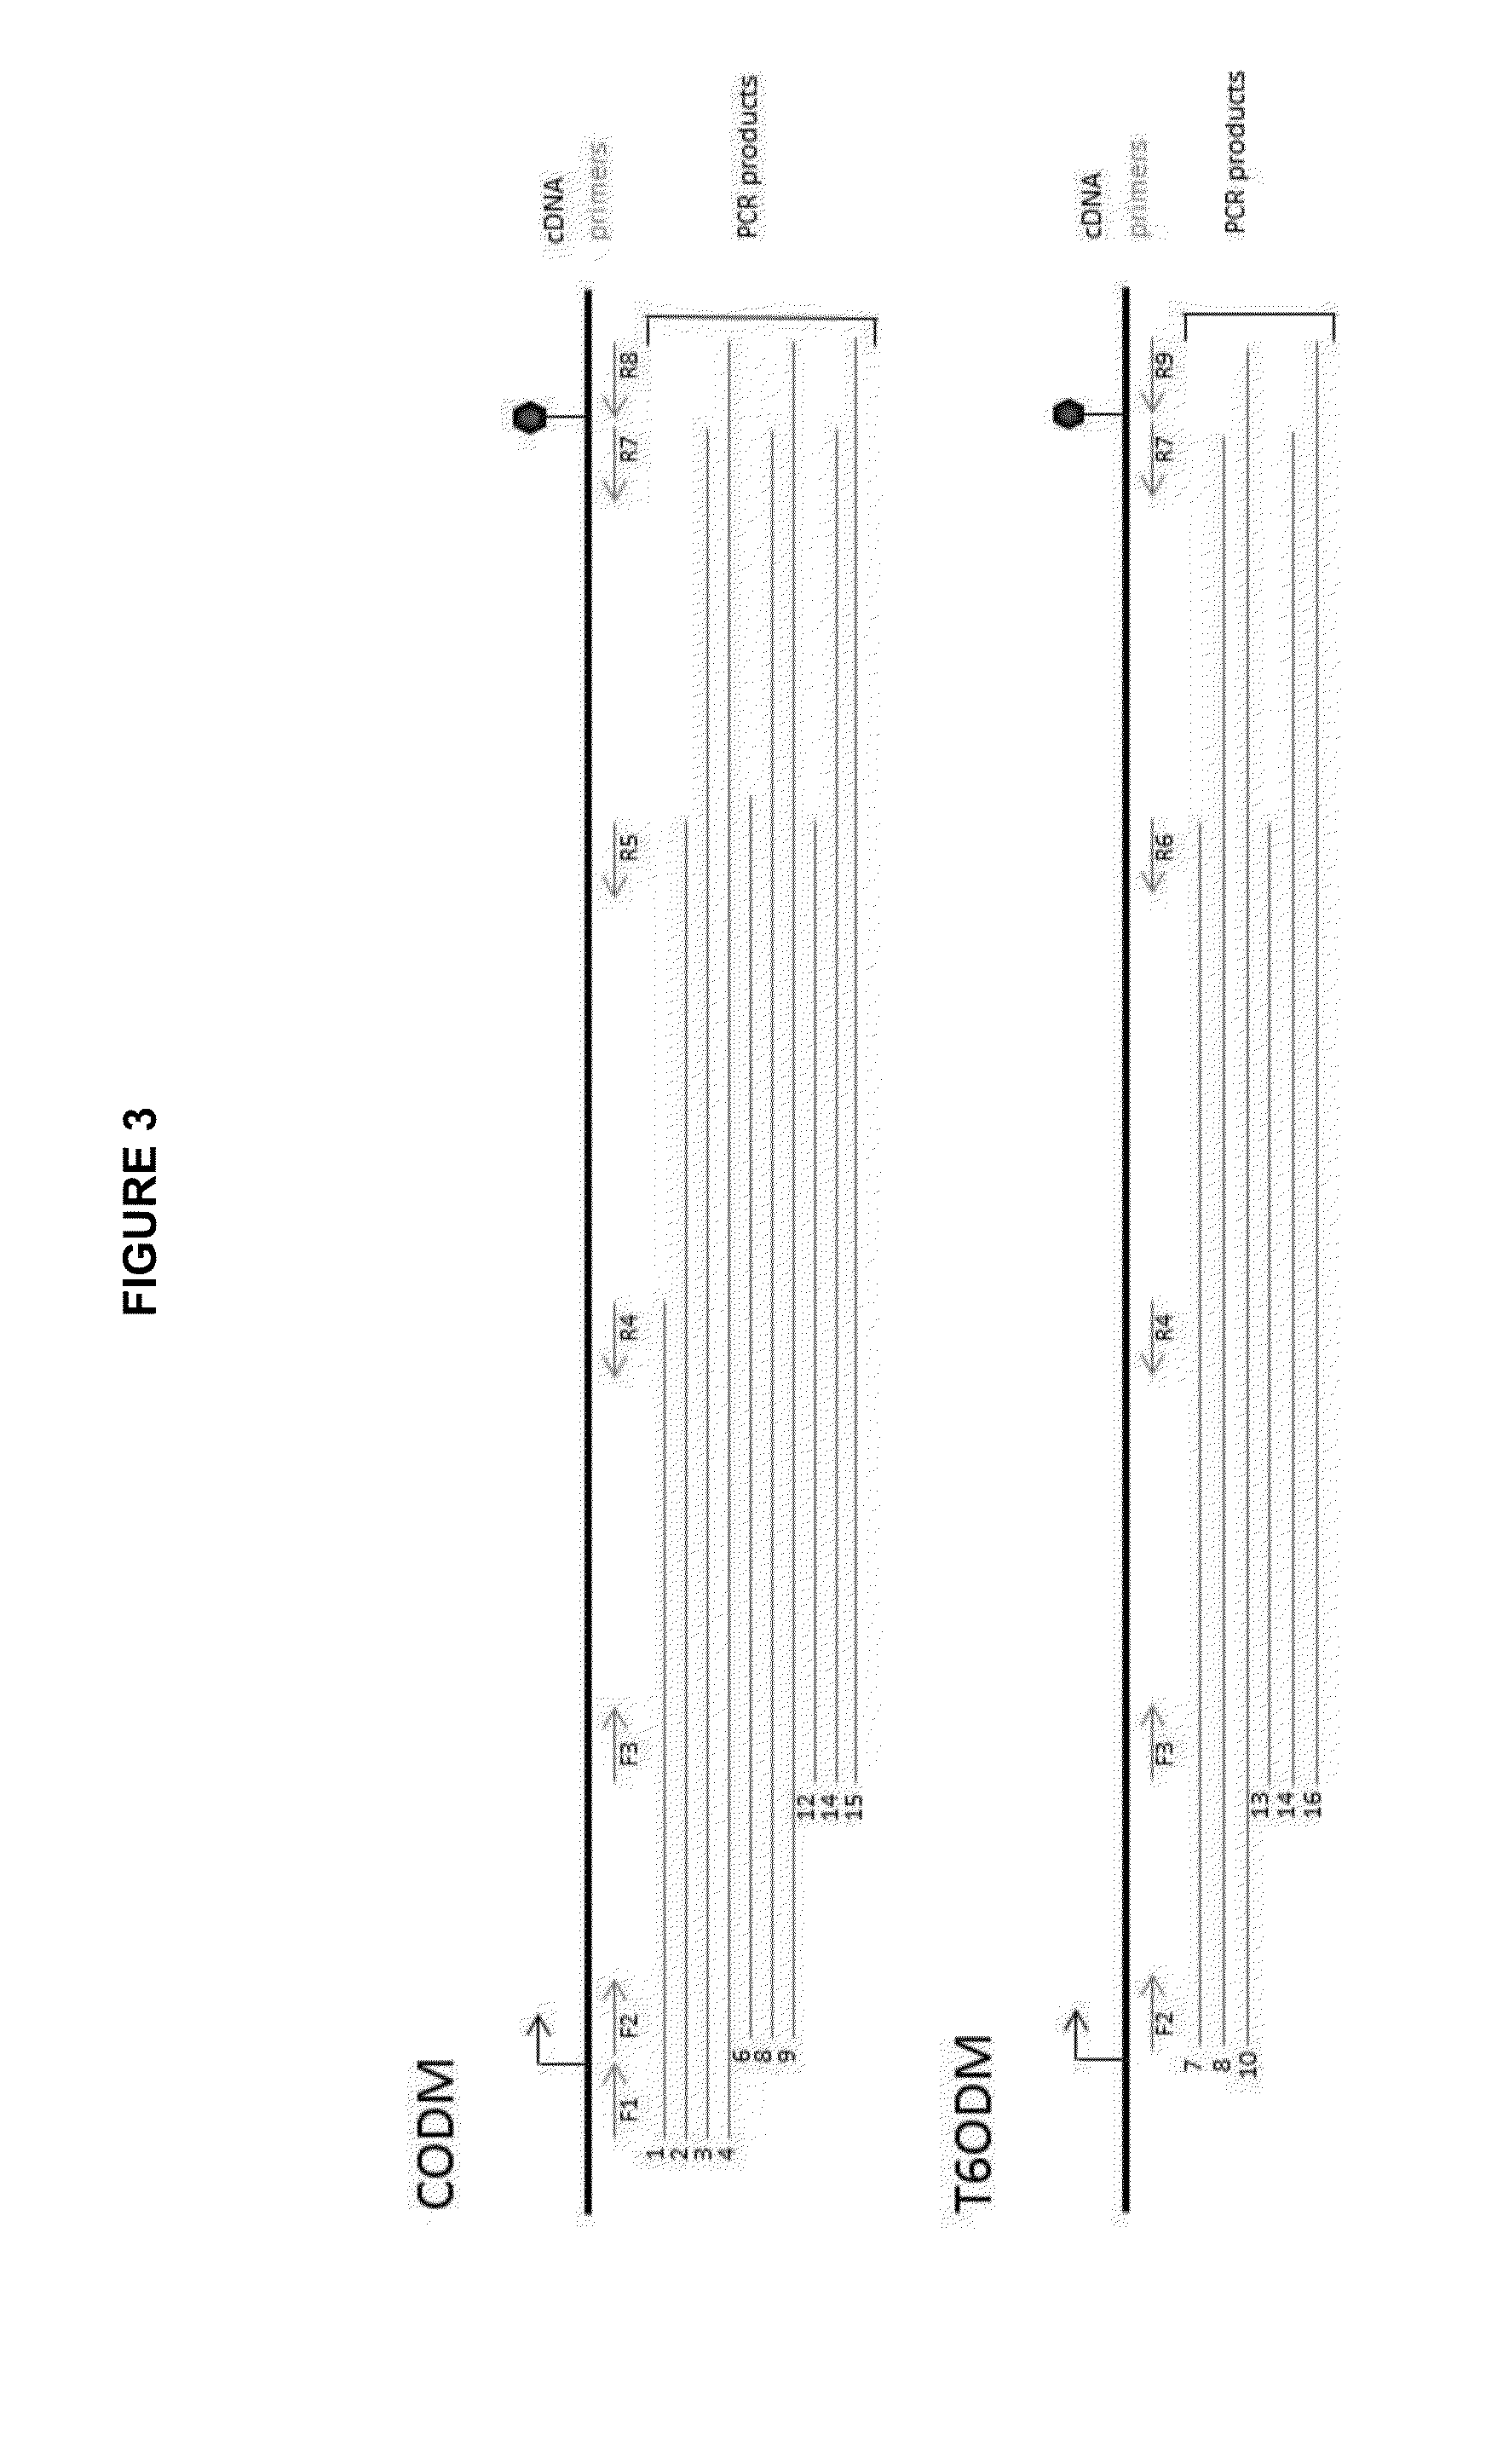 Papaver bracteatum with modified alkaloid content